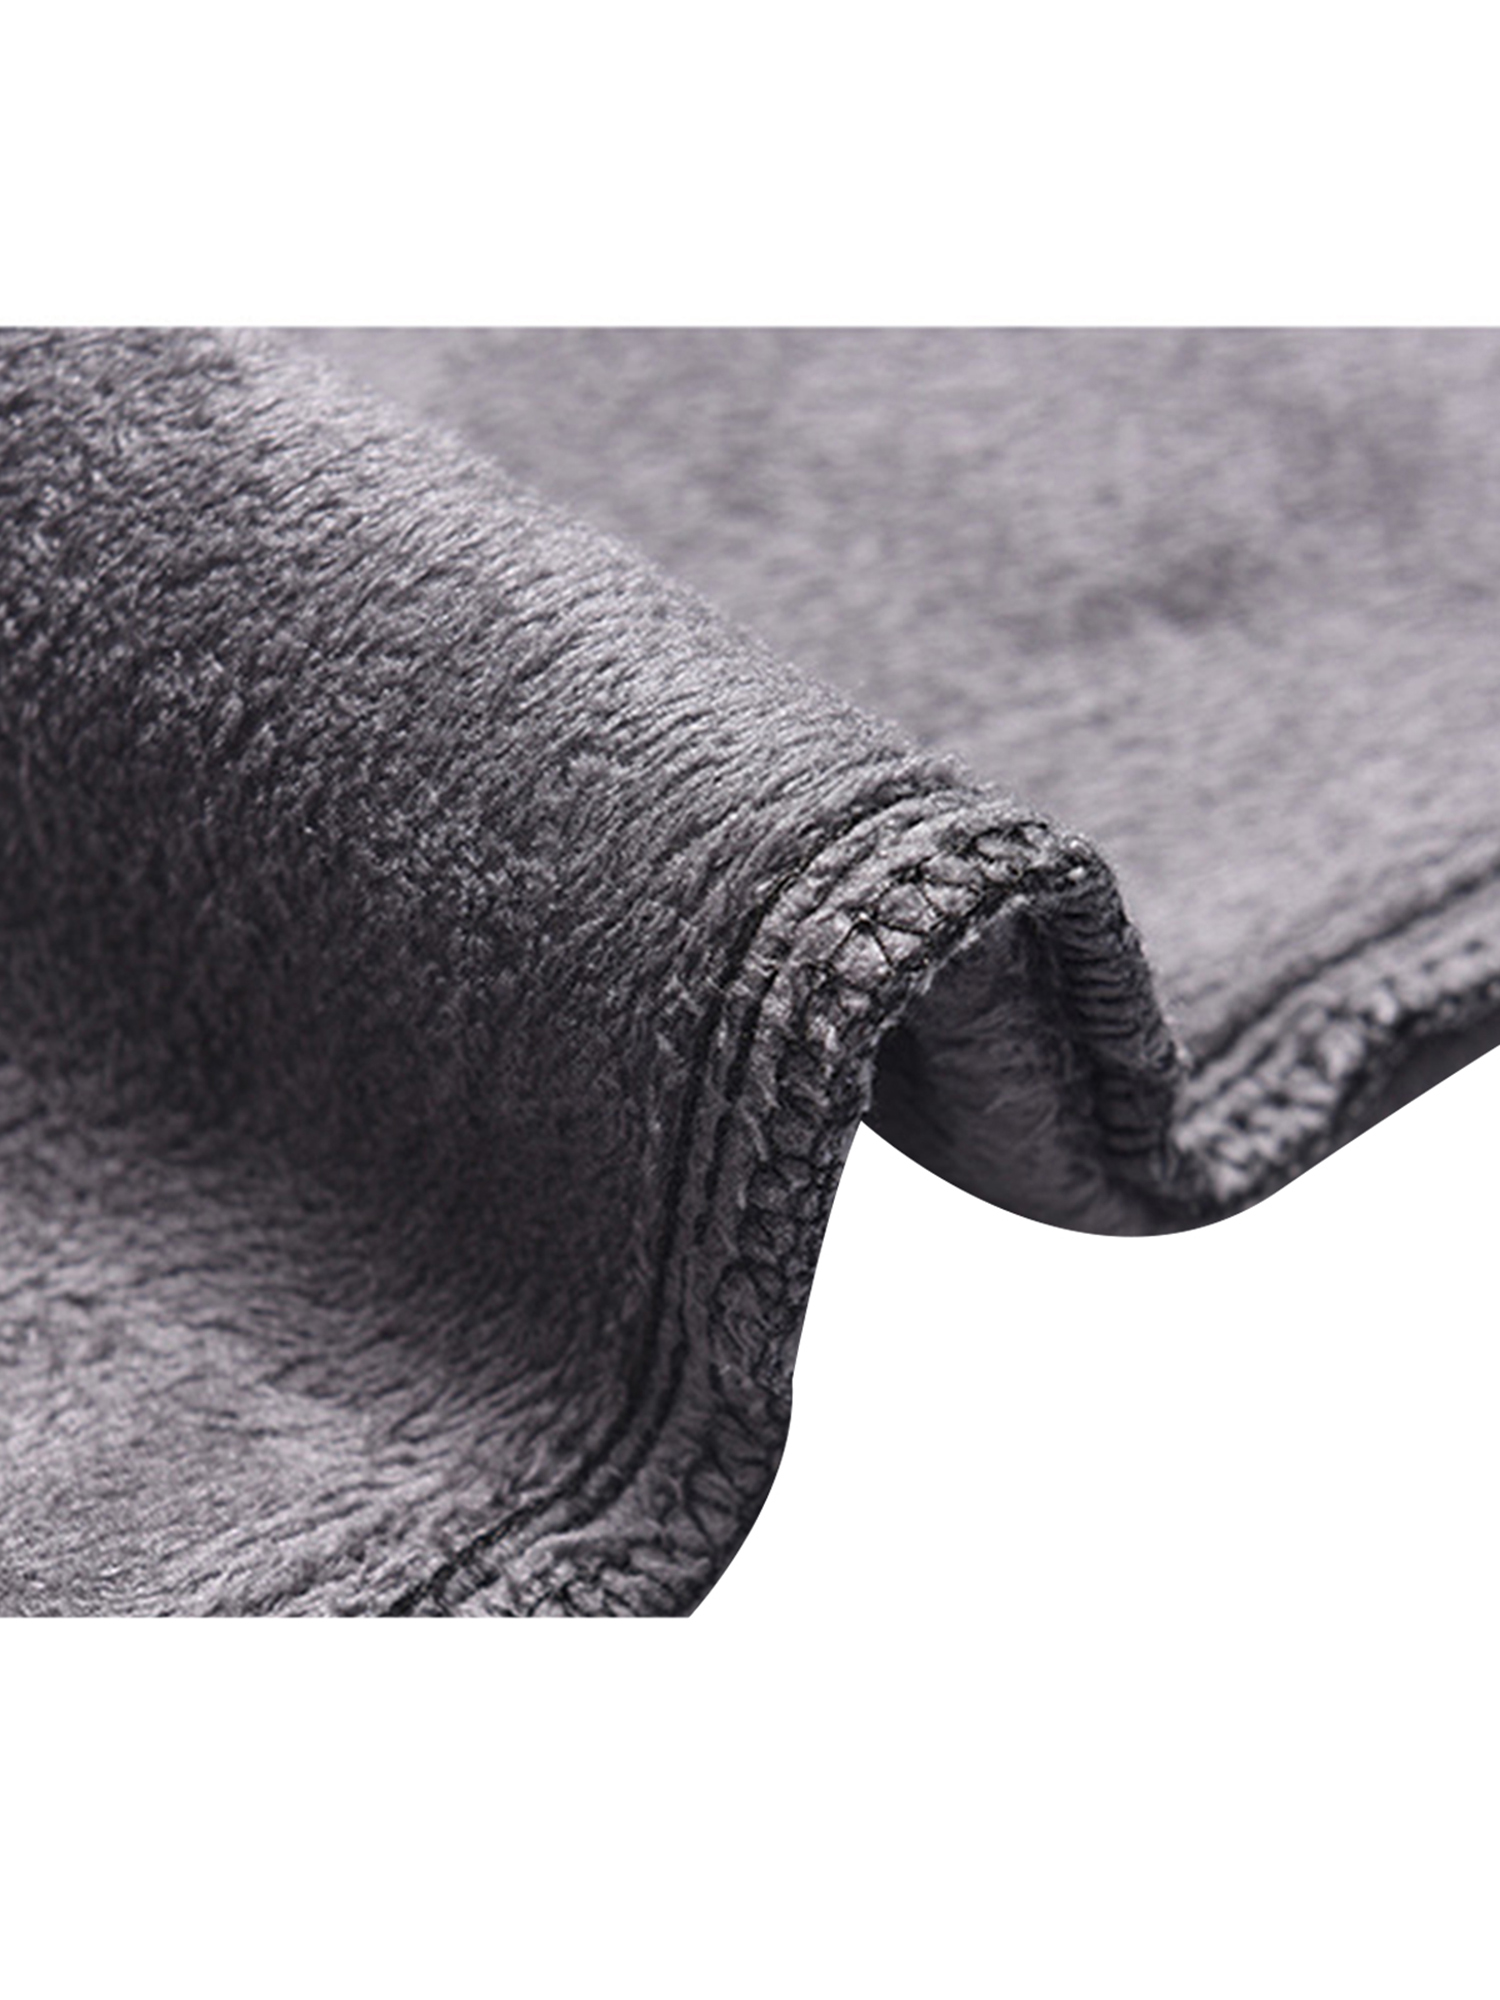 Listenwind Womens Warm Fleece Lined Jeans Stretch Skinny Winter Thick Jeggings Denim Long Pants Gray - image 5 of 6